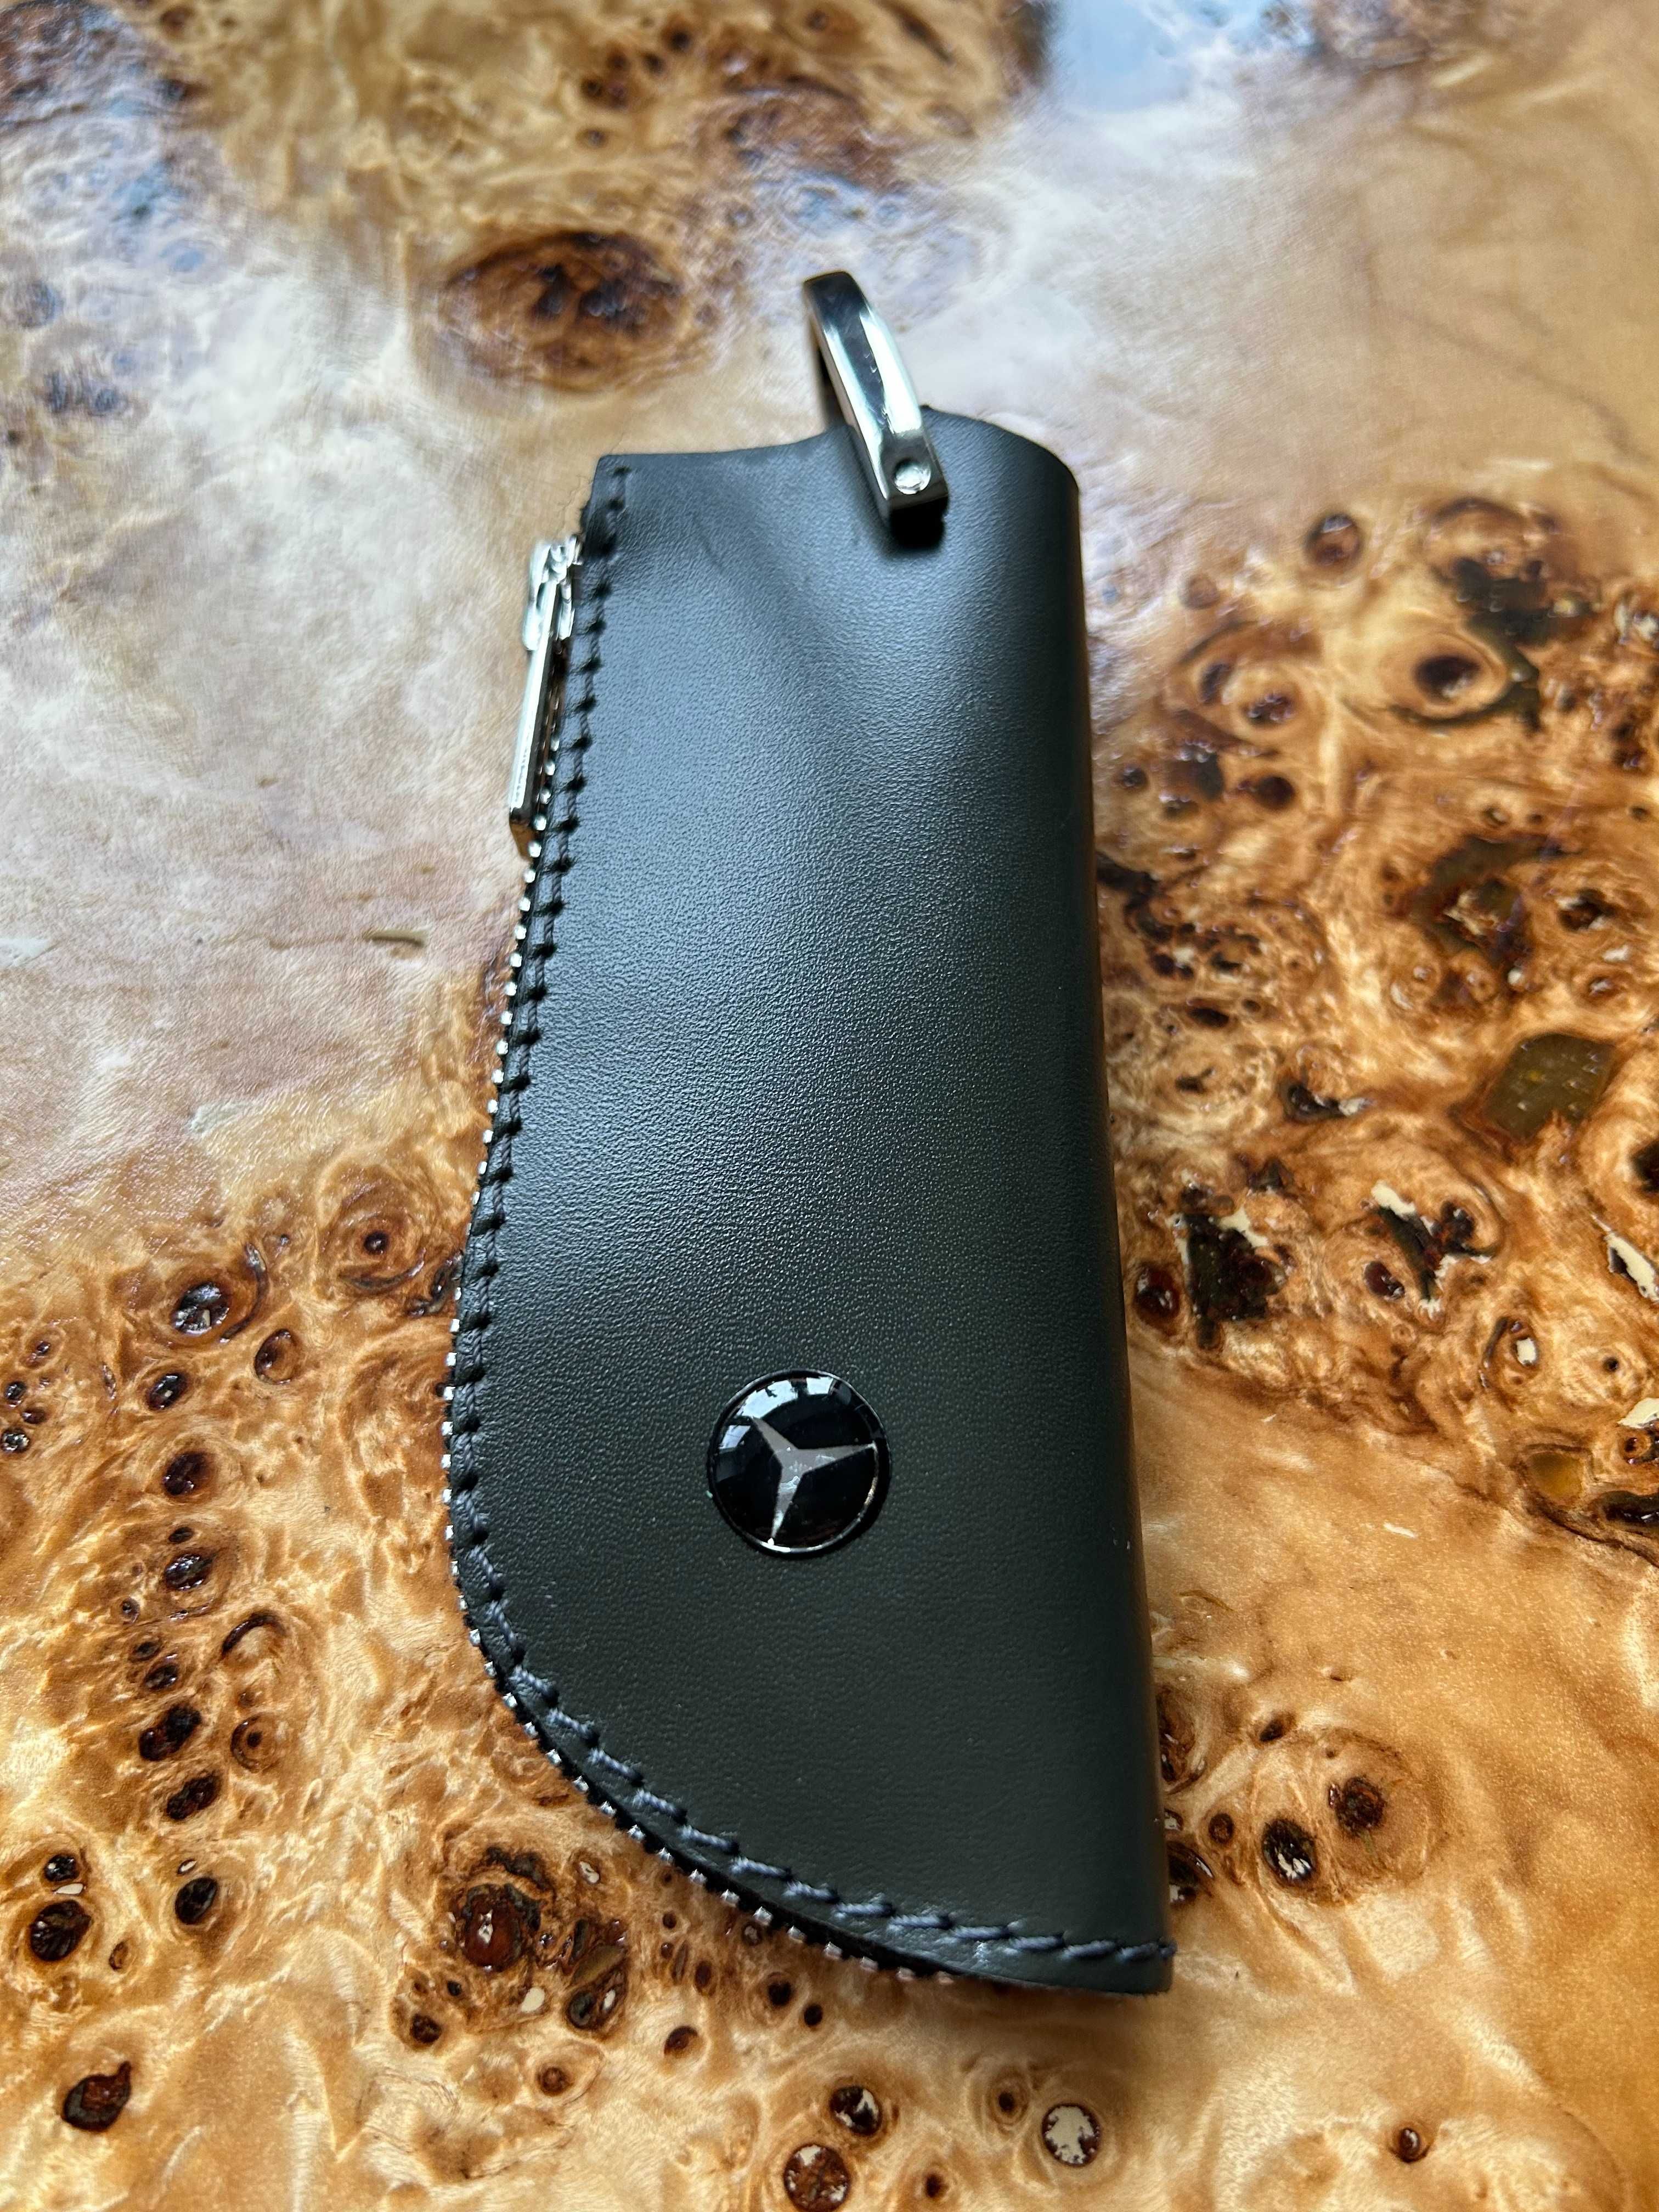 Ключница для автомобильного брелка, ключей.